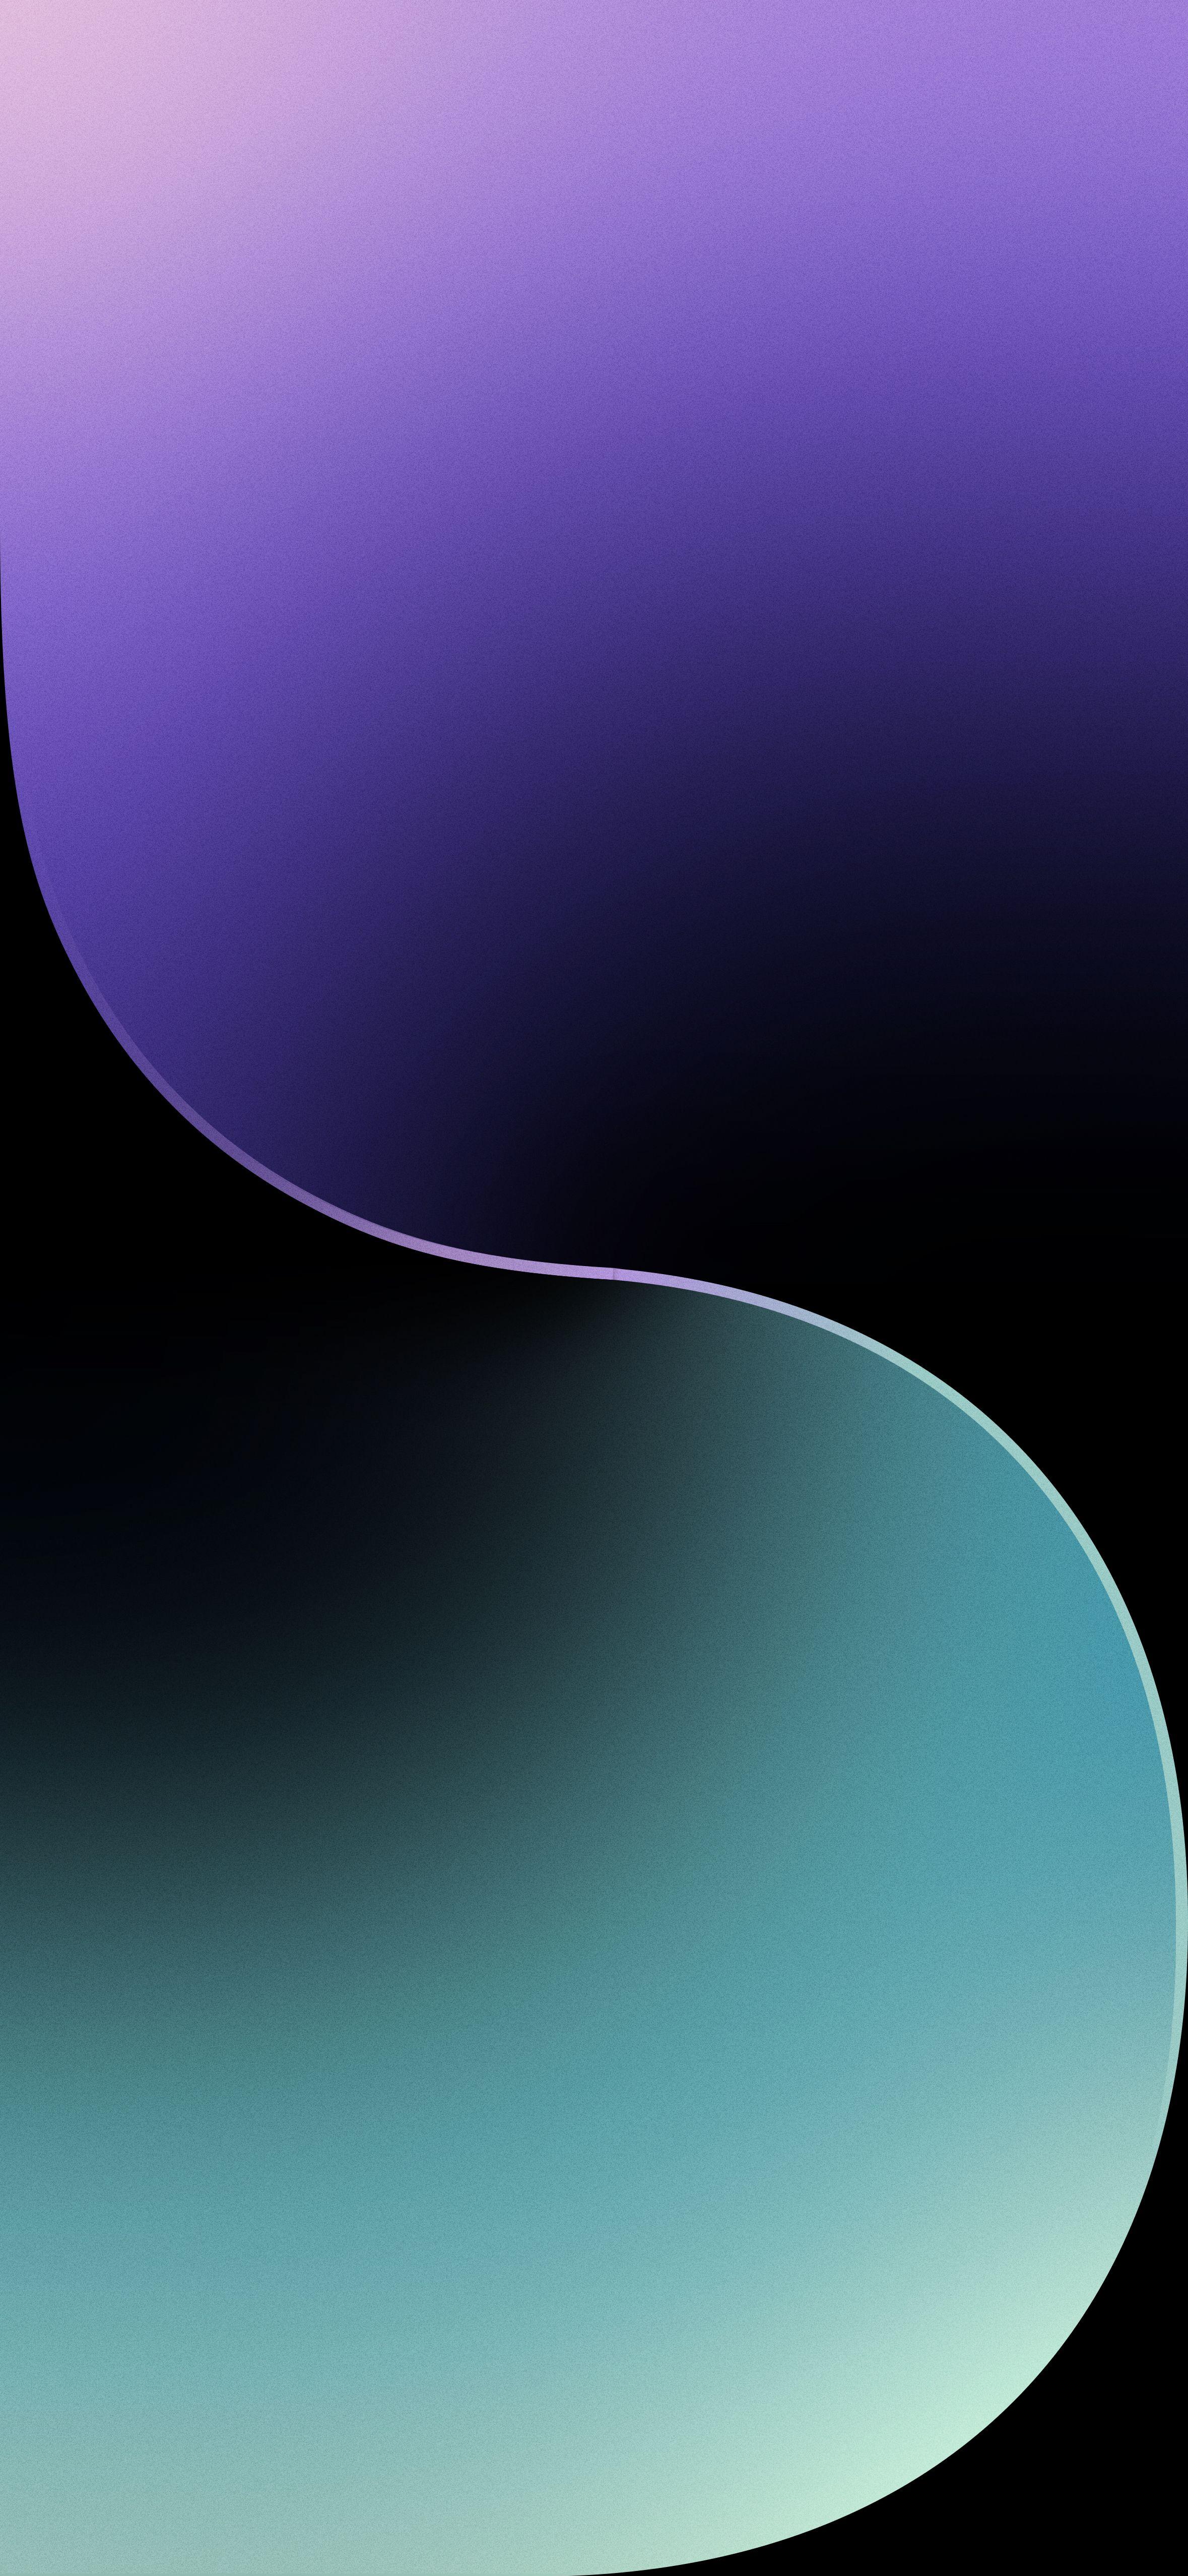 iPhone Pro Concept Wallpaper Space Black